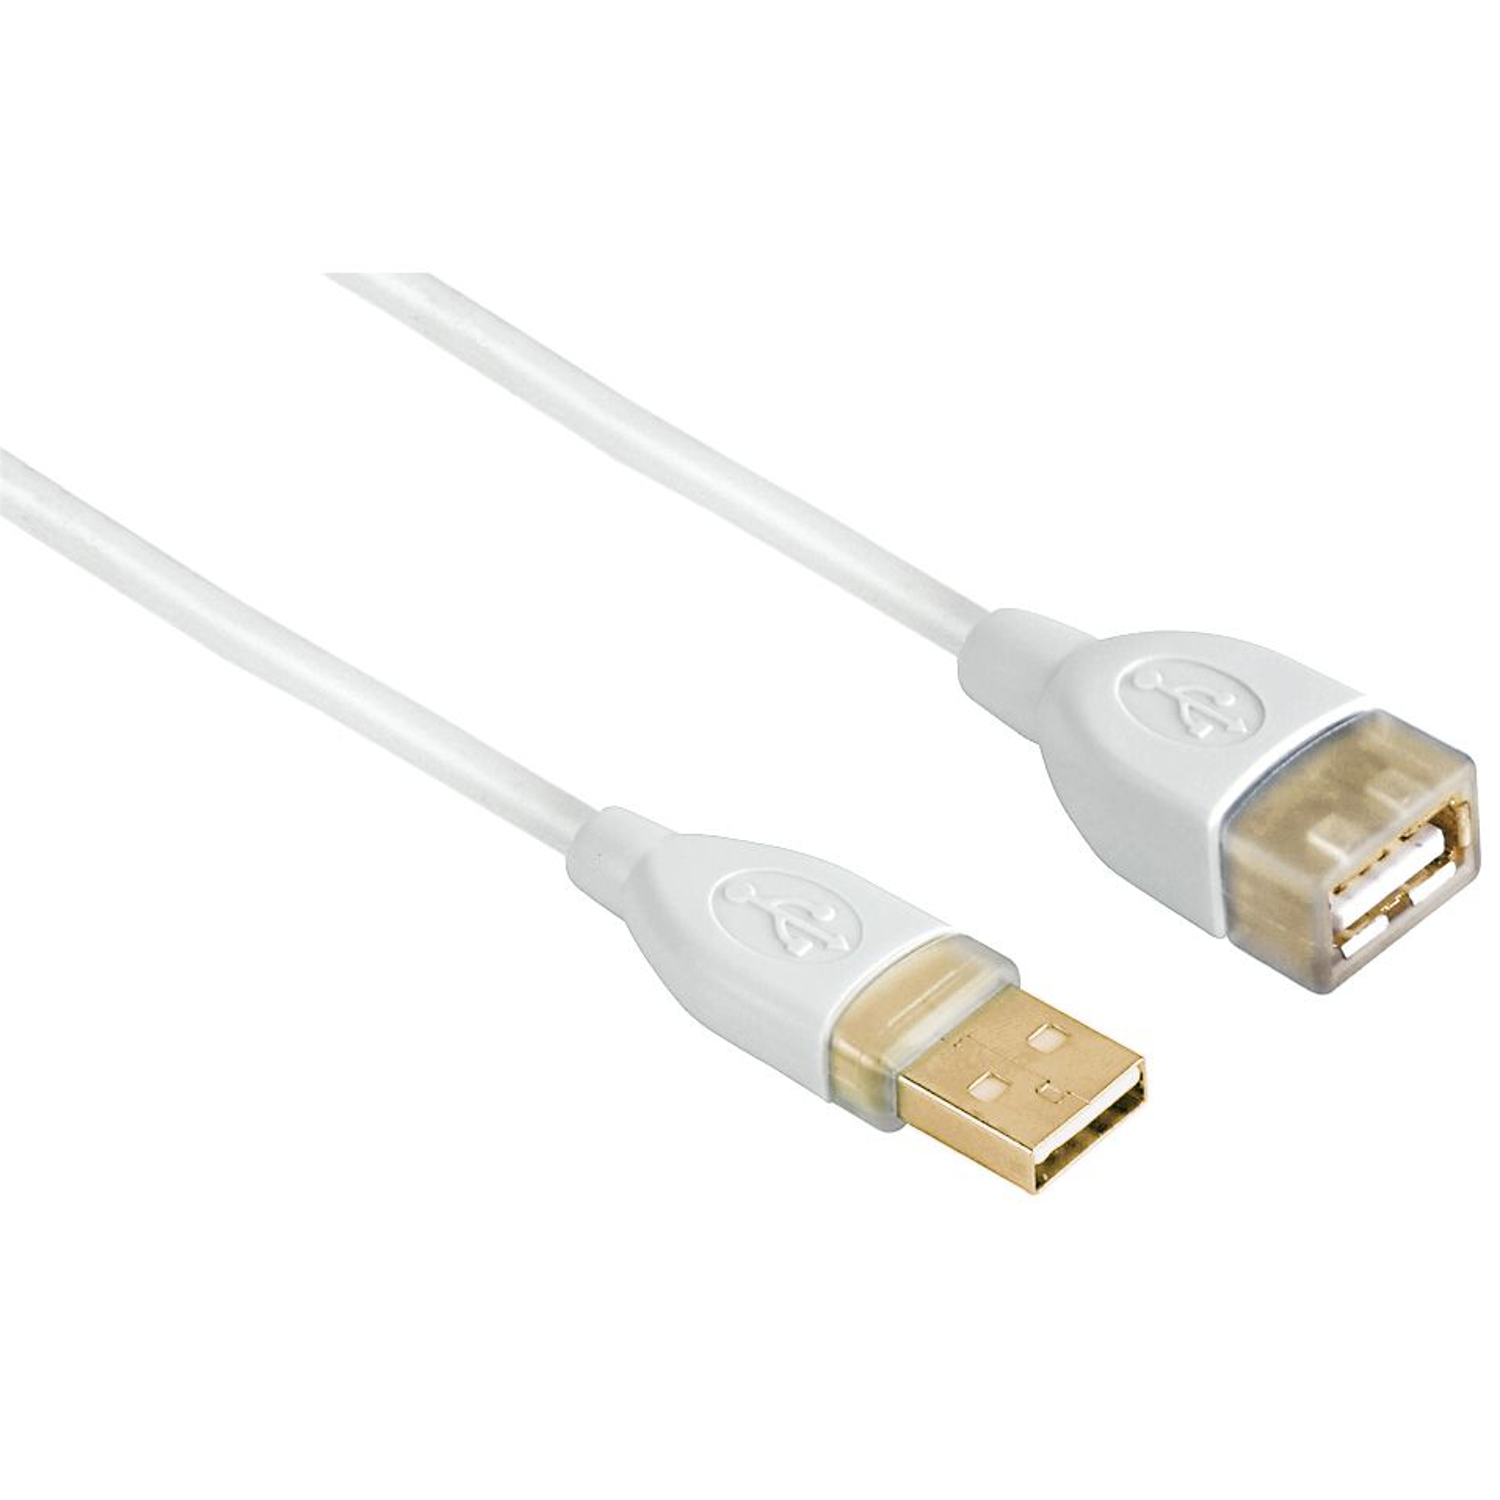  Cablu USB 2.0 Hama 78467 Tip A-A, 5m 